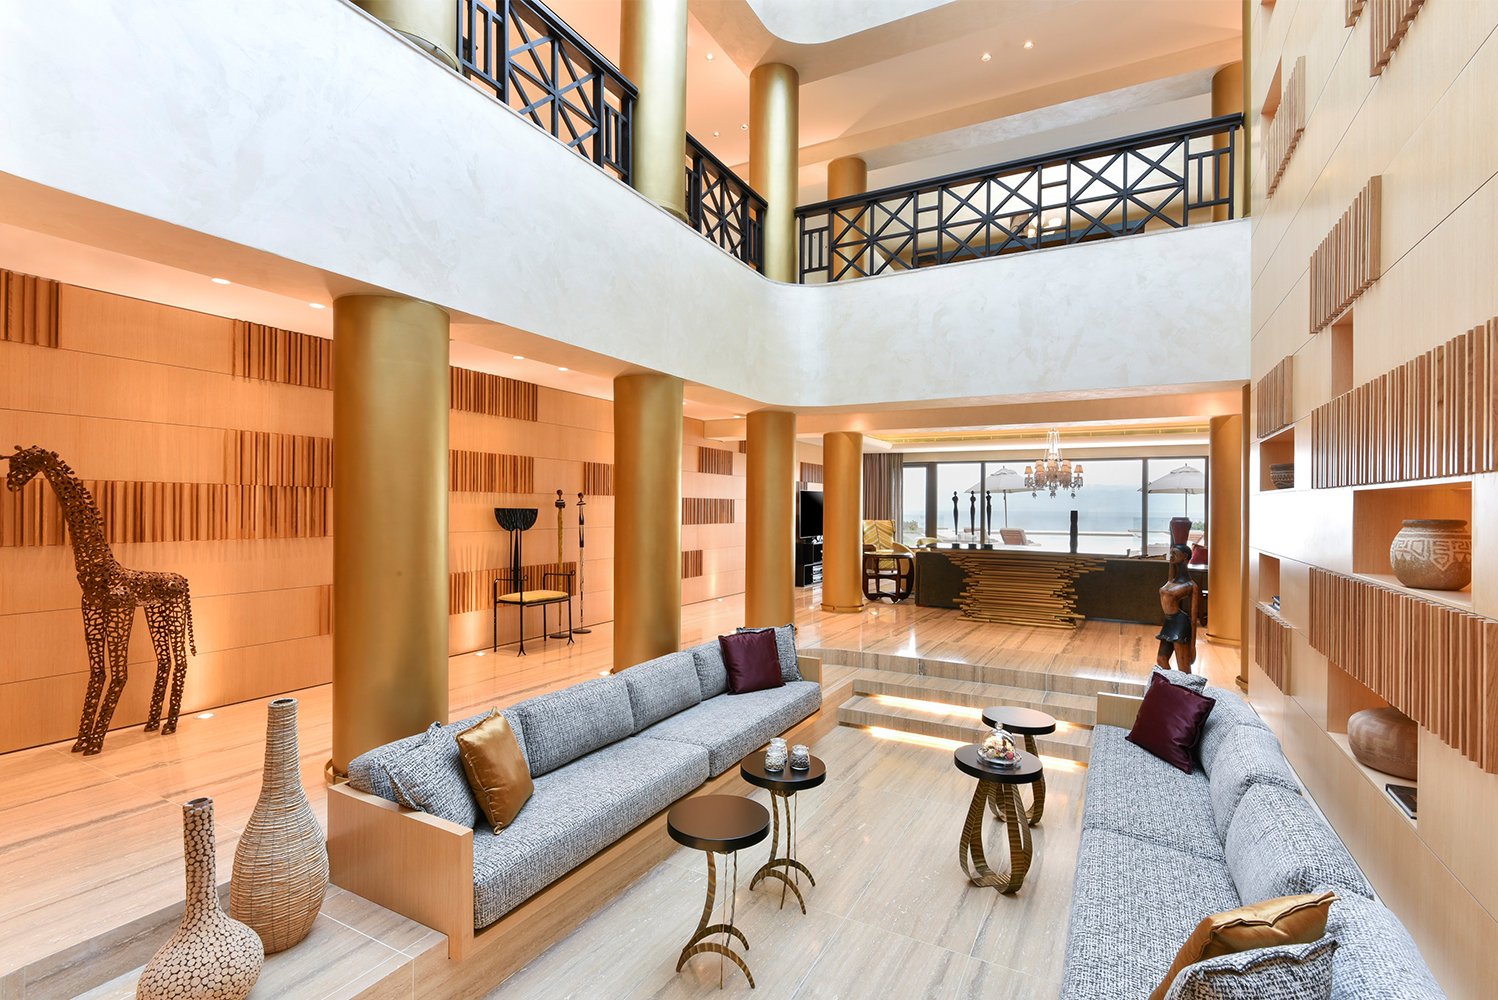 Kempinski Hotel Ishtar Dead Sea  a property located in the Dead Sea Jordan  completed a 15 million renovation projec